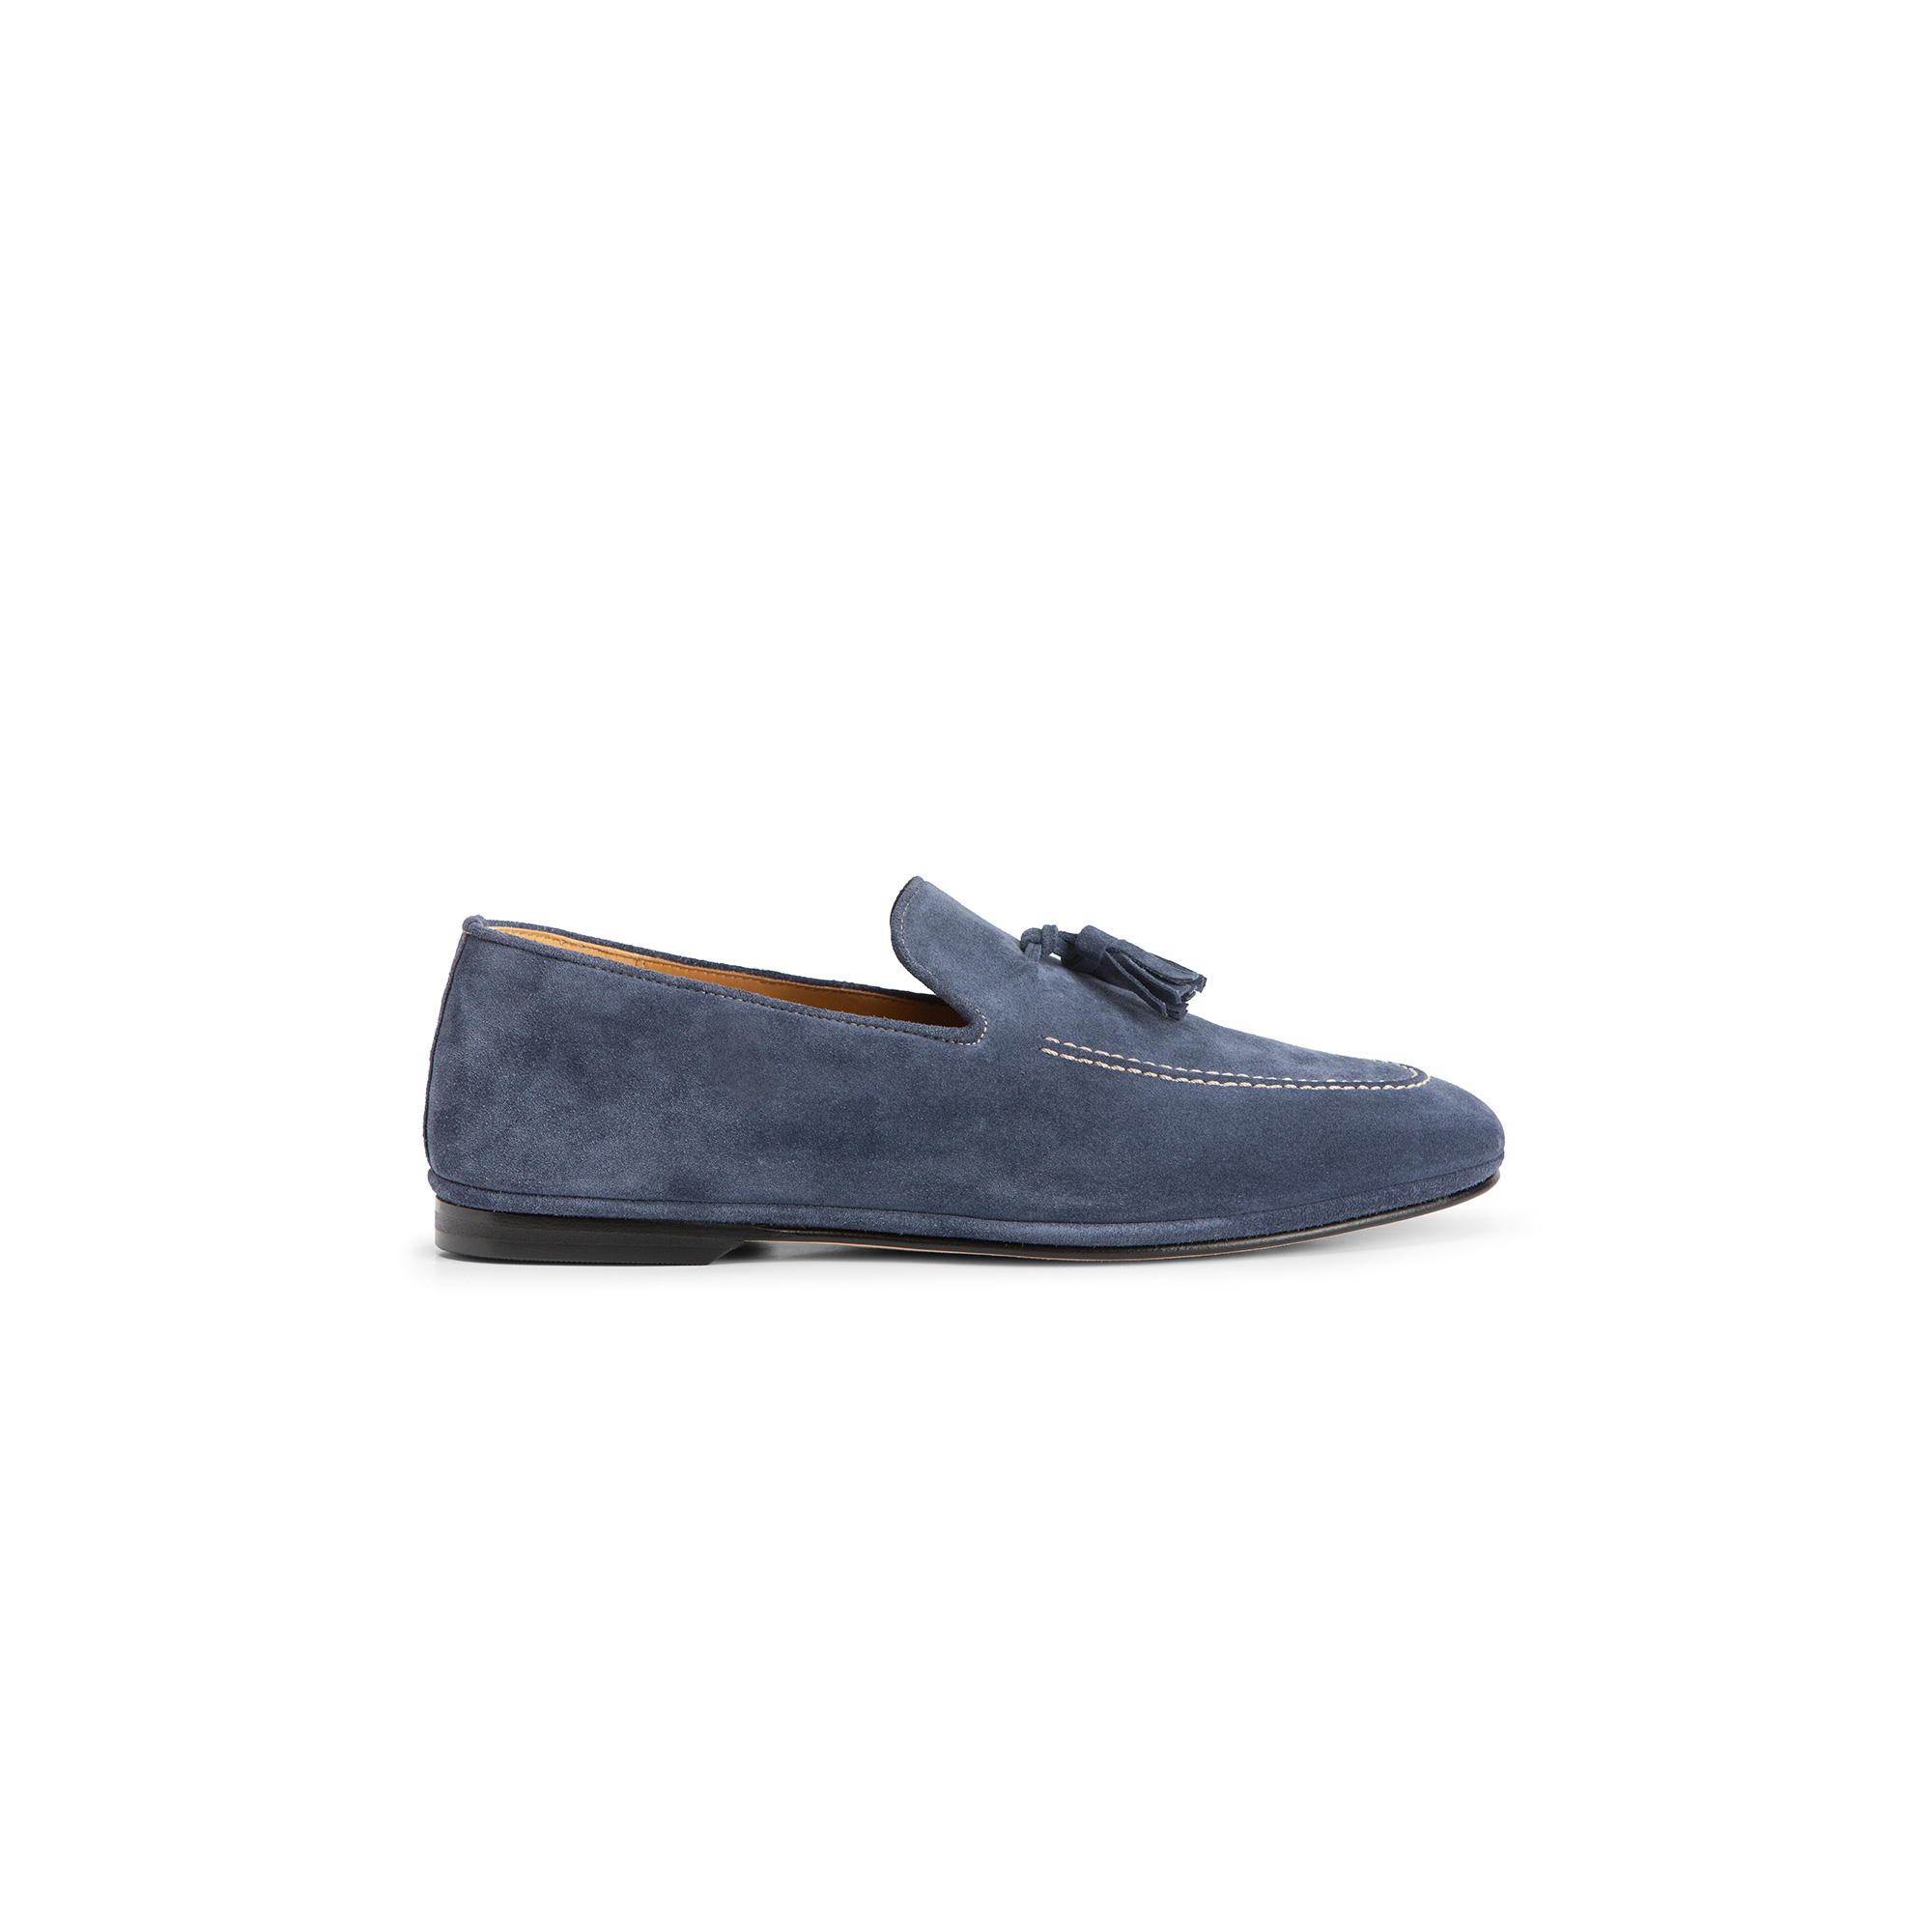 Pantofola esterno chiusa velour jeans - Farfalla italian slippers